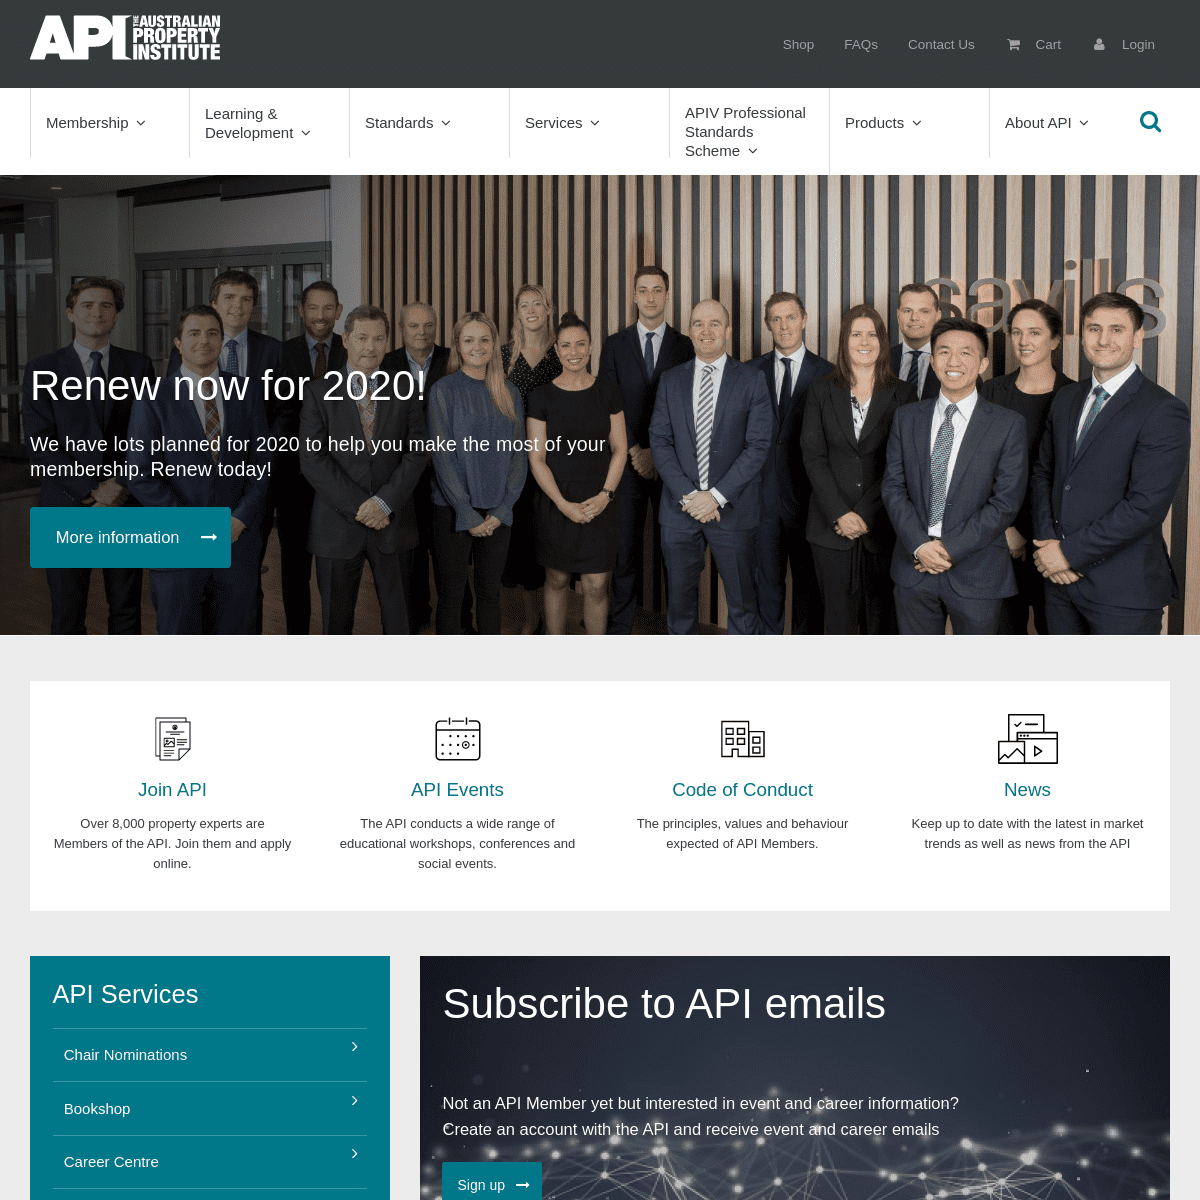 A complete backup of api.org.au